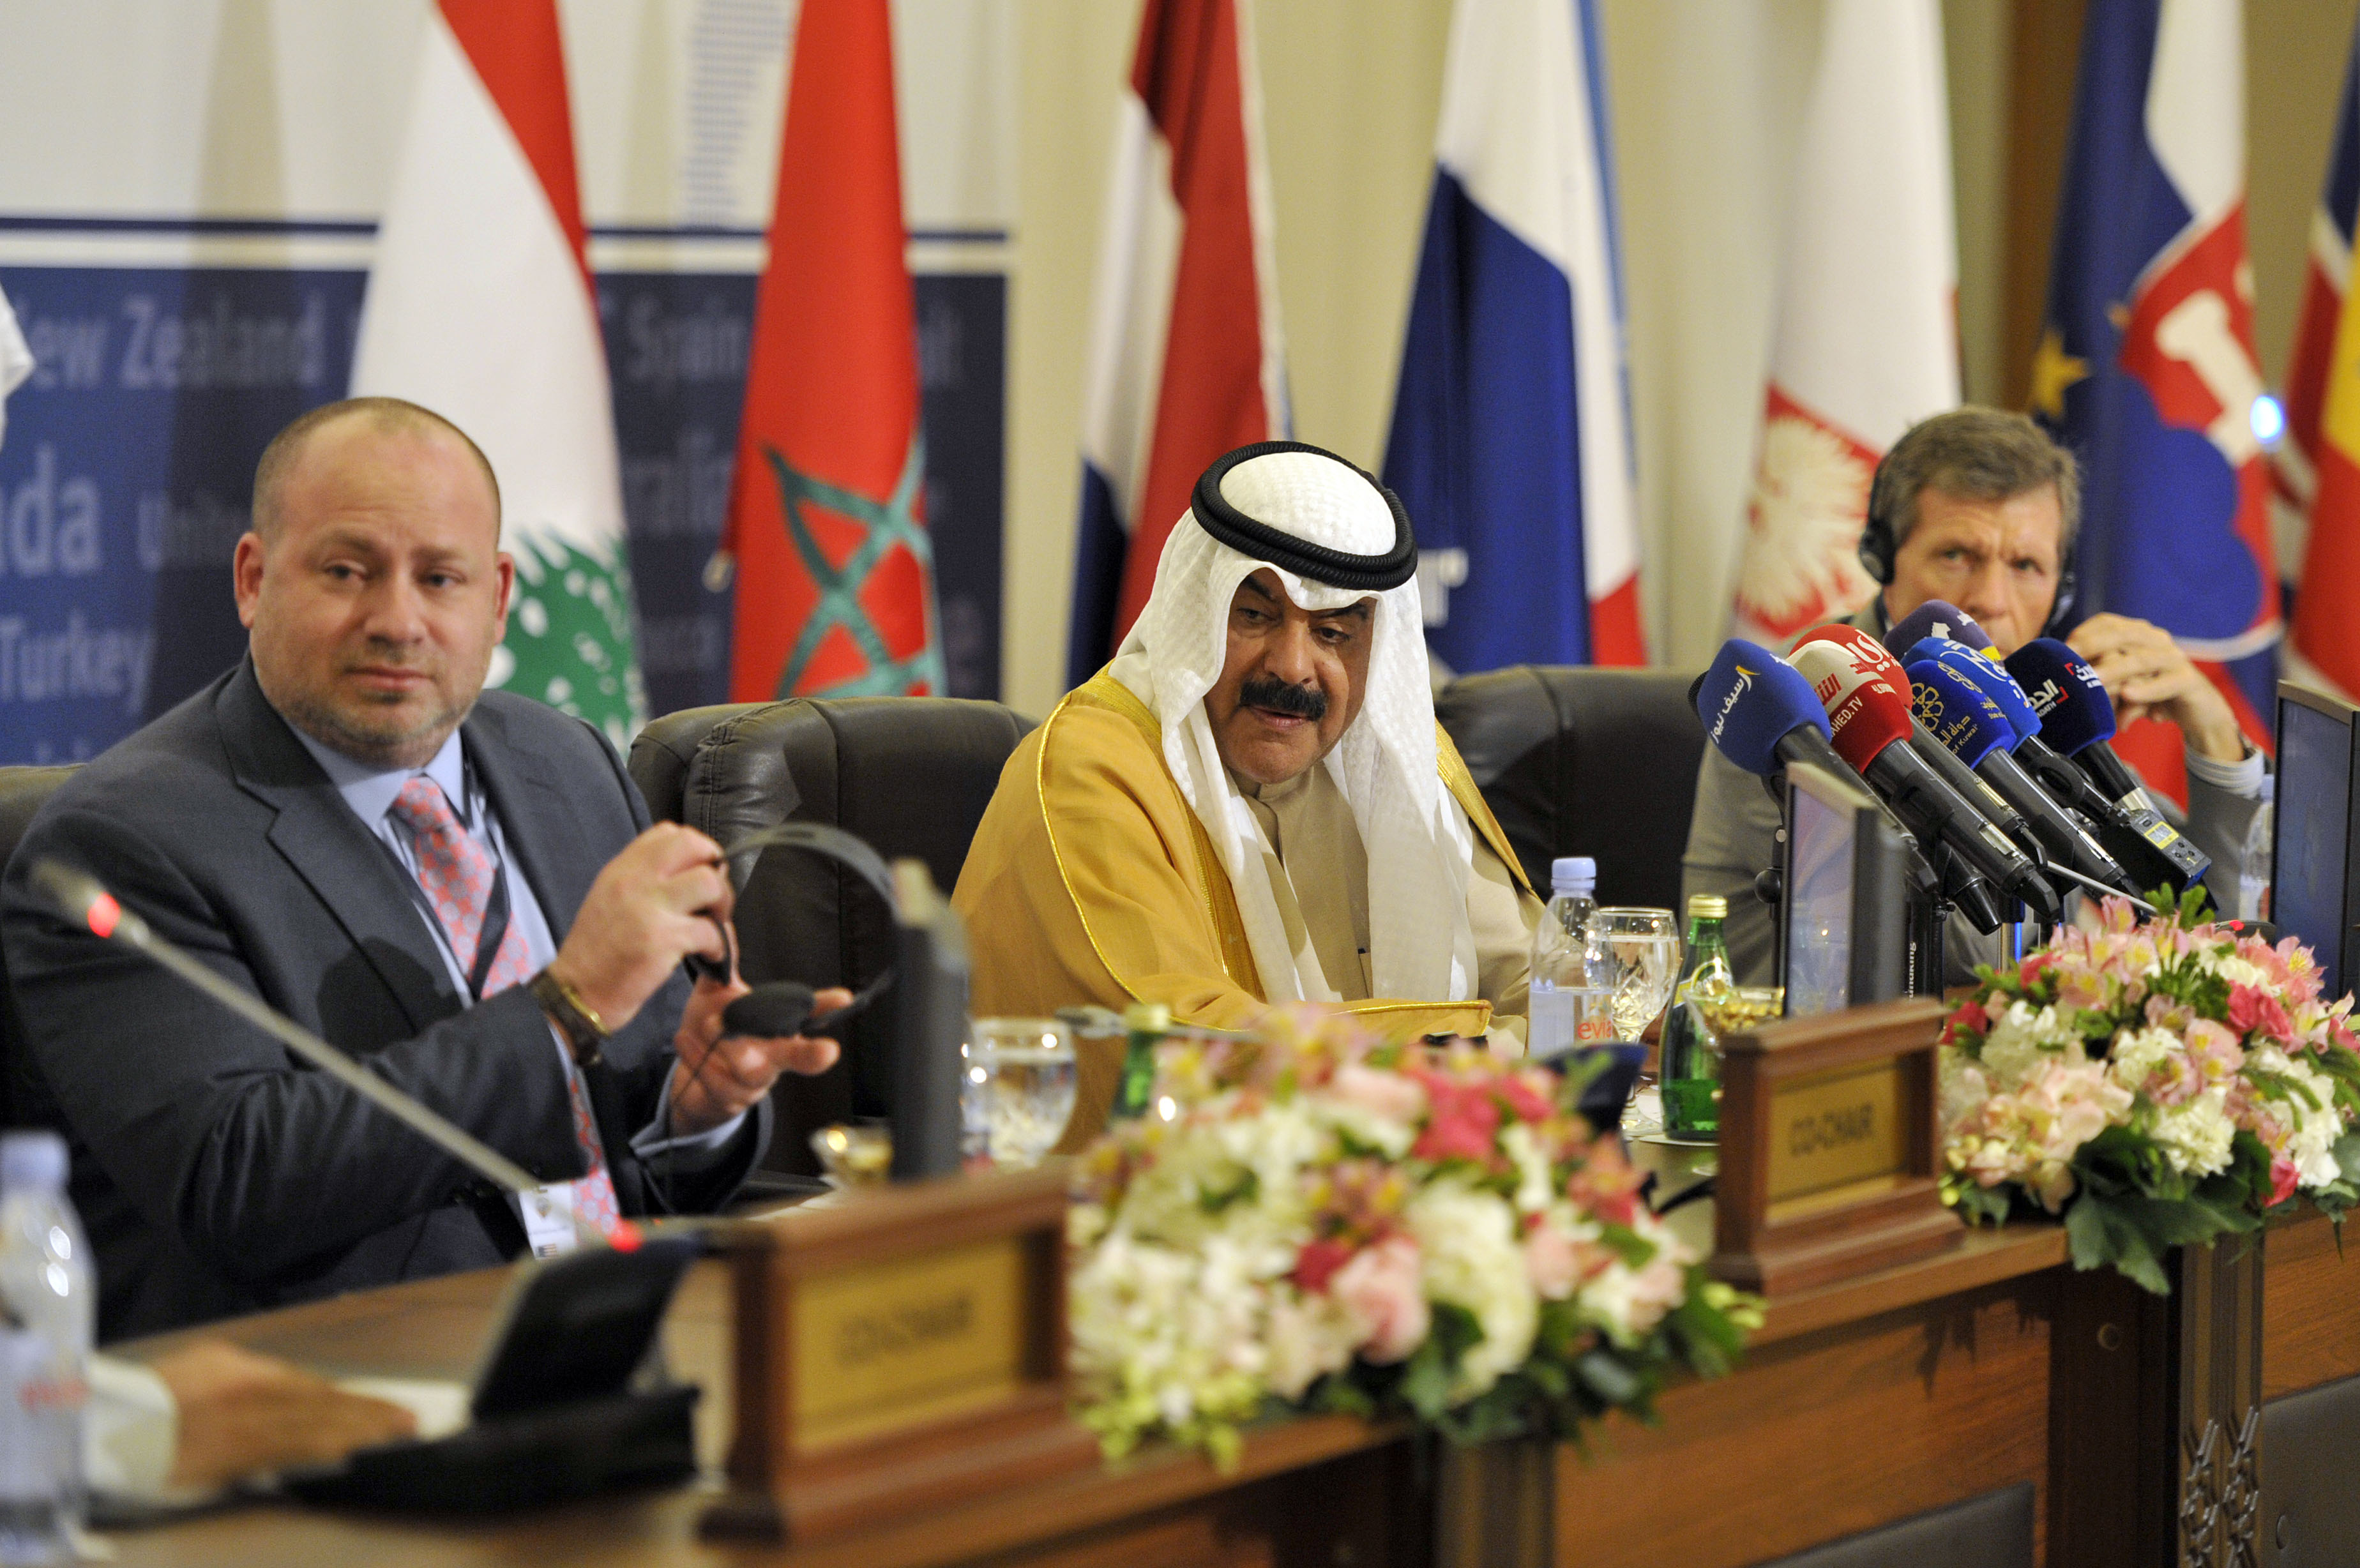 Kuwaiti Deputy Minister of Foreign Affairs Khaled Al-Jarallah